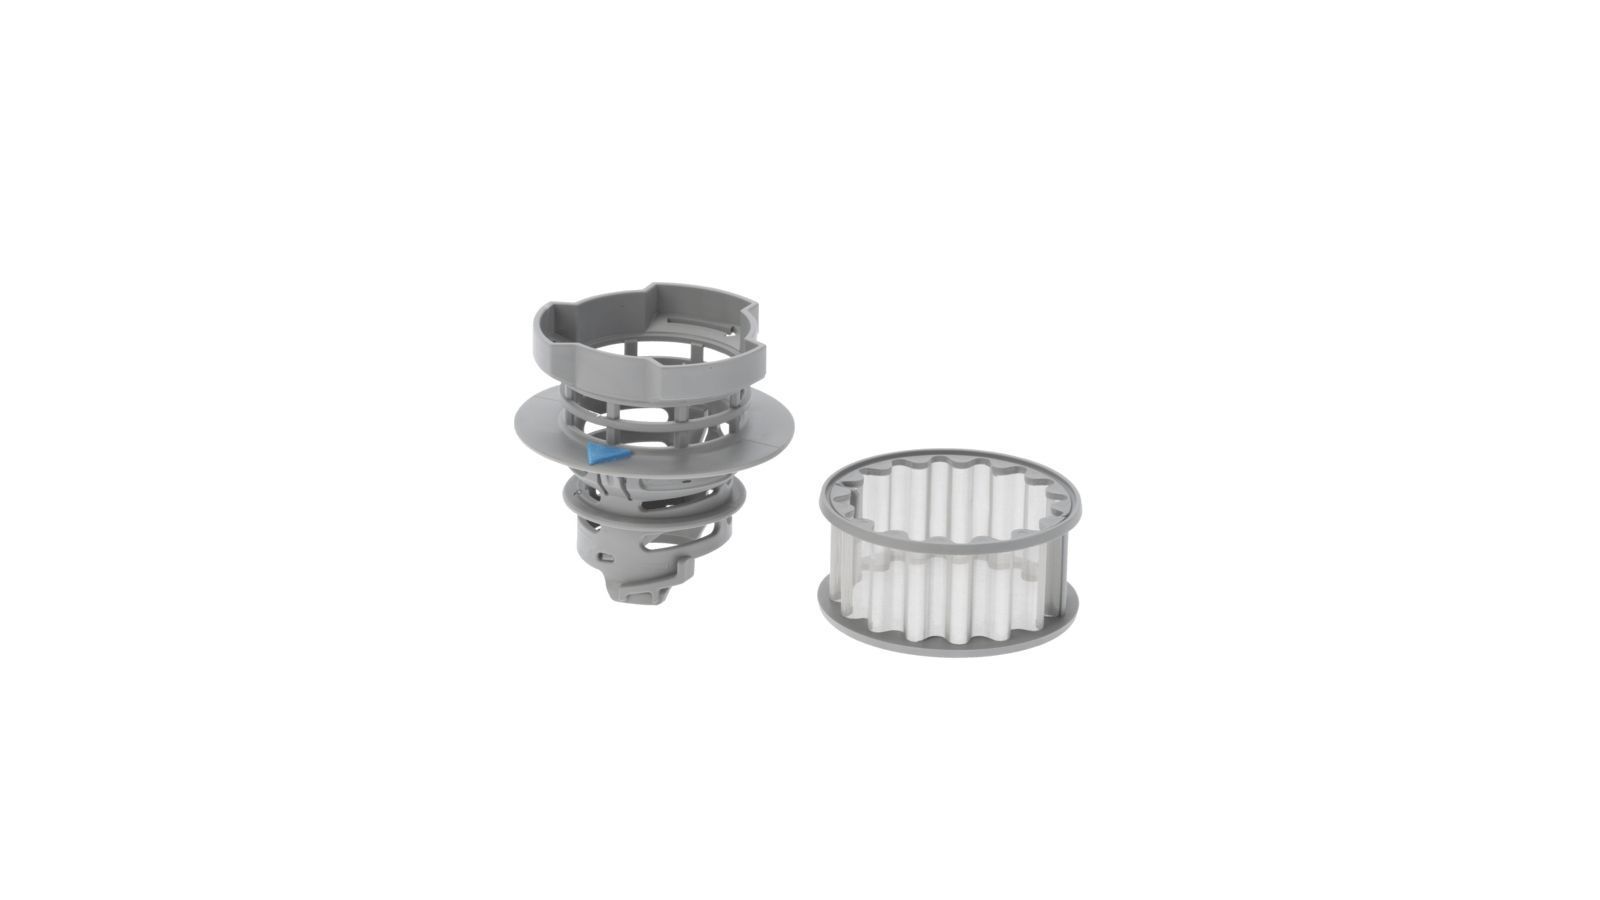 Microfilter, Filter for Bosch Siemens Dishwashers - Part nr. BSH 00649100 BSH - Bosch / Siemens